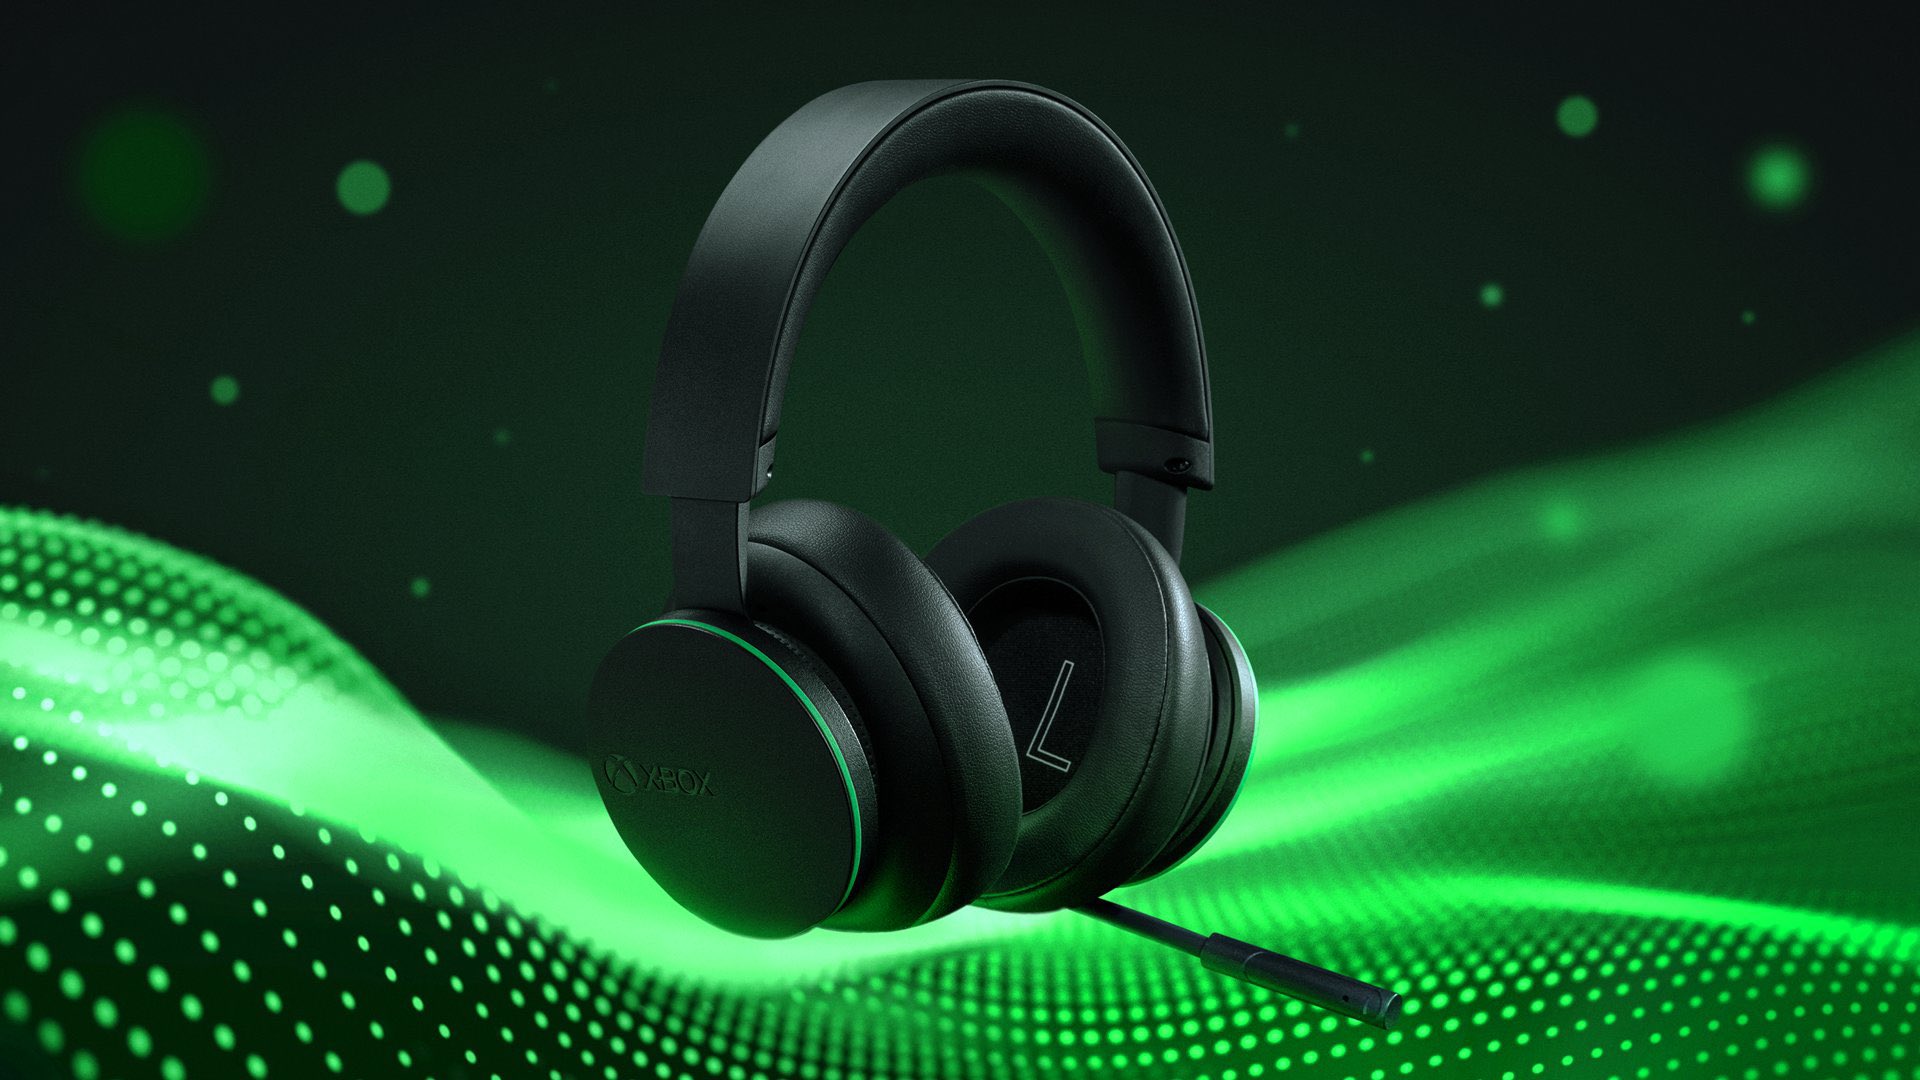 The New Xbox Wireless Headset (Credit: Xbox)